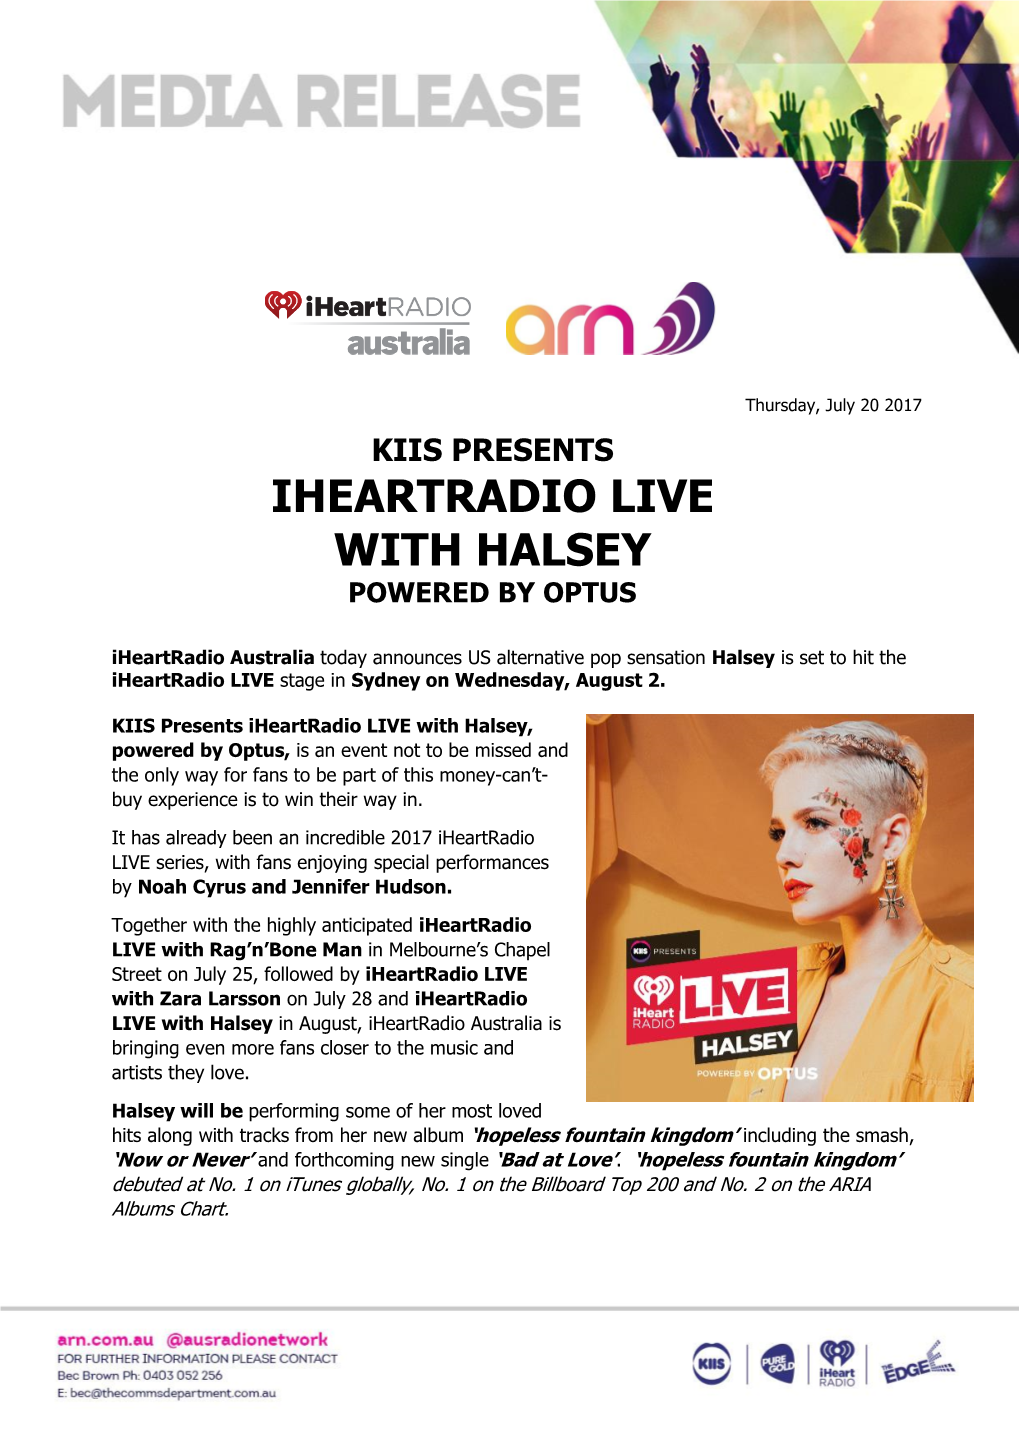 Iheartradio Live with Halsey